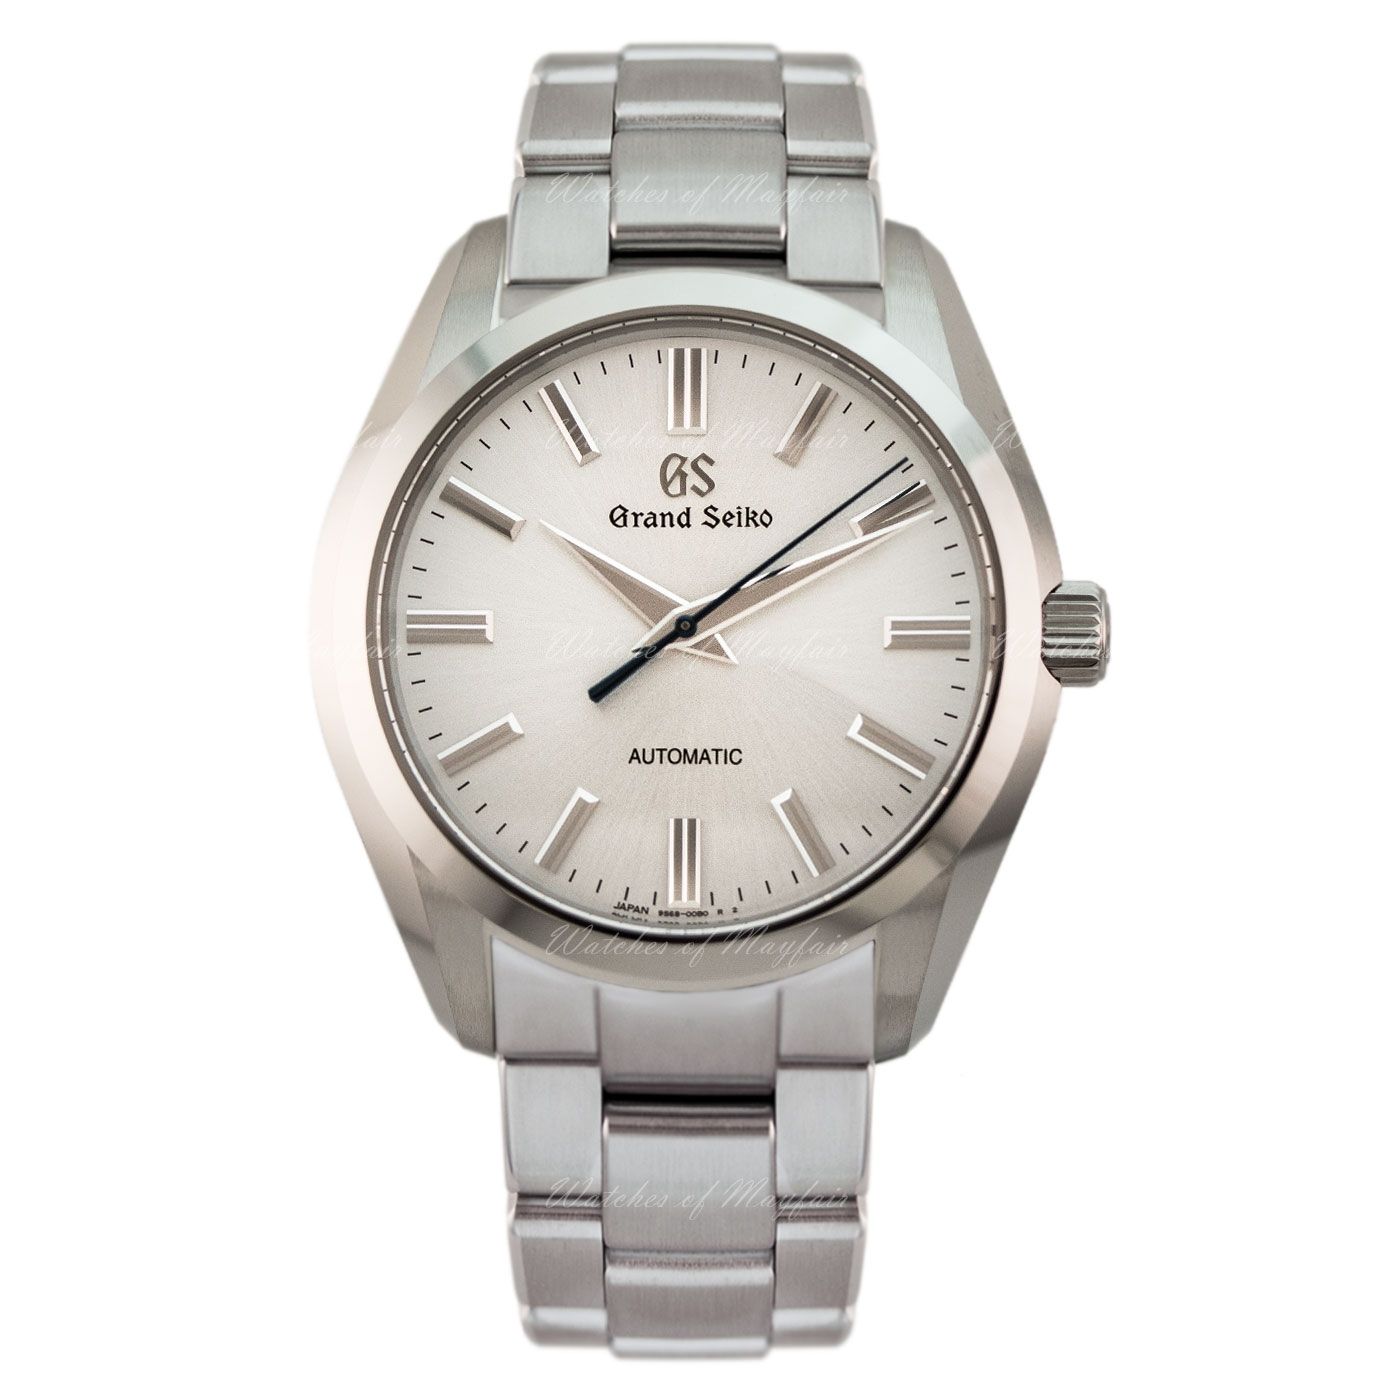 Grand Seiko SBGR299 Automatic 3 Day 42 mm watch. Buy Now